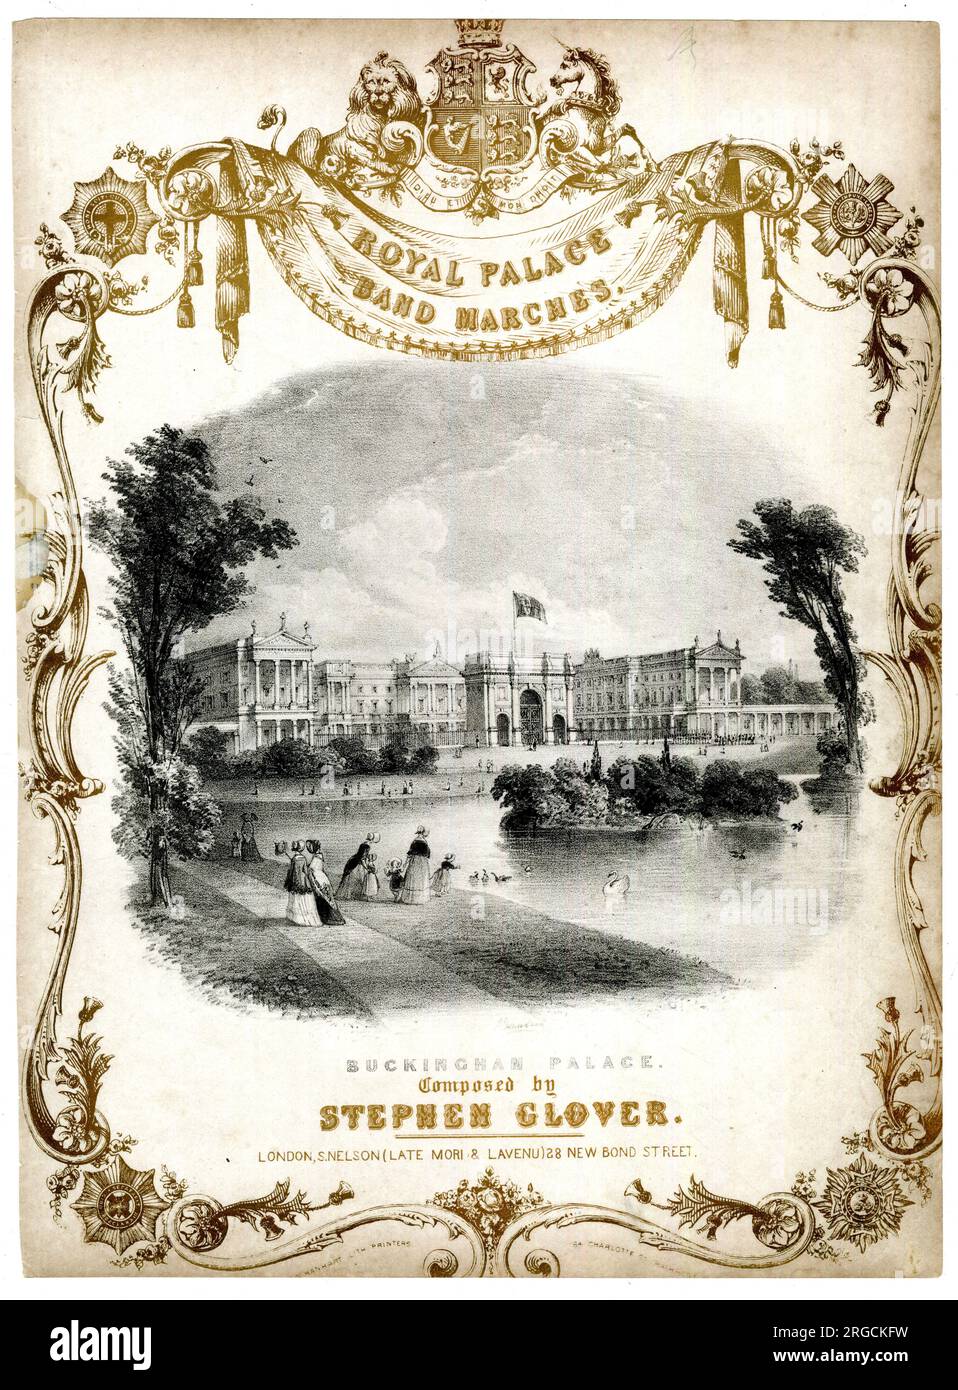 Portada musical, Royal Palace Band Marches, compuesta por Stephen Glover, con vistas al Palacio de Buckingham, Londres Foto de stock